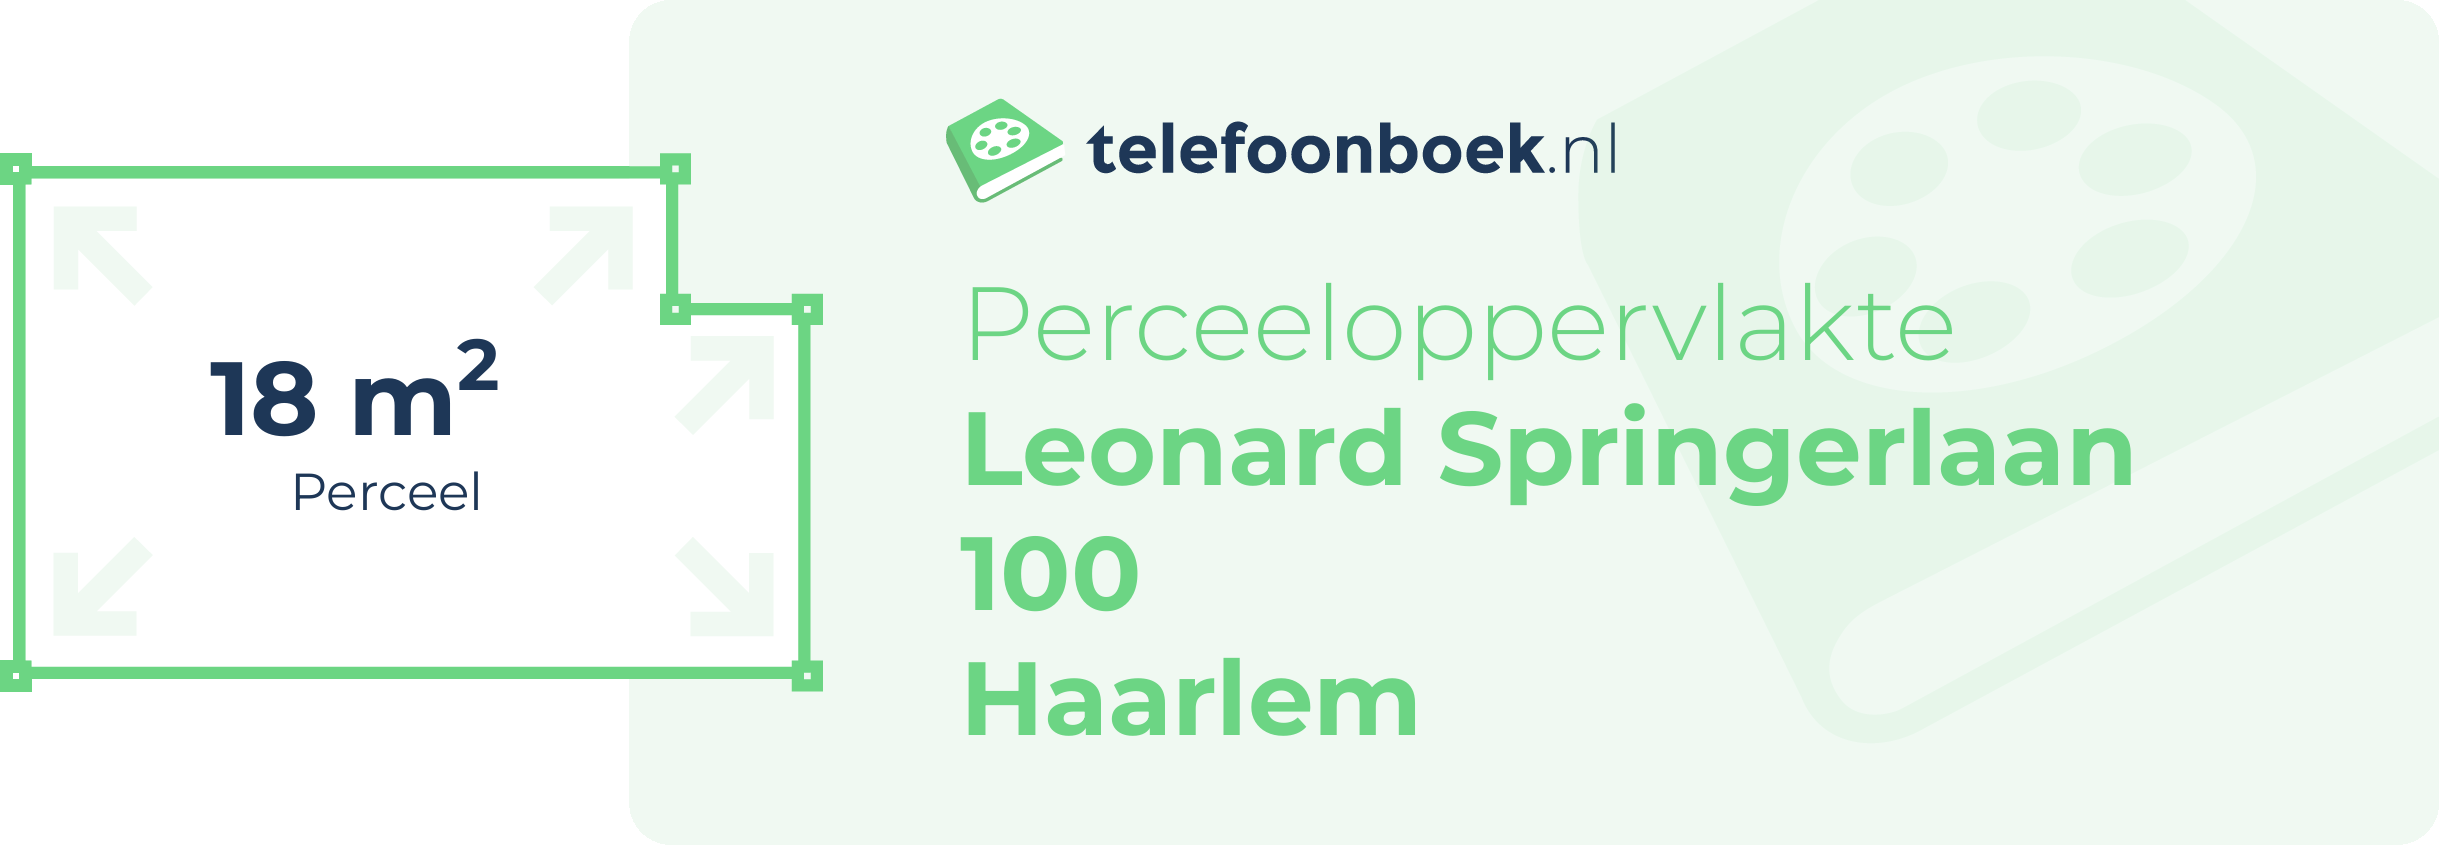 Perceeloppervlakte Leonard Springerlaan 100 Haarlem